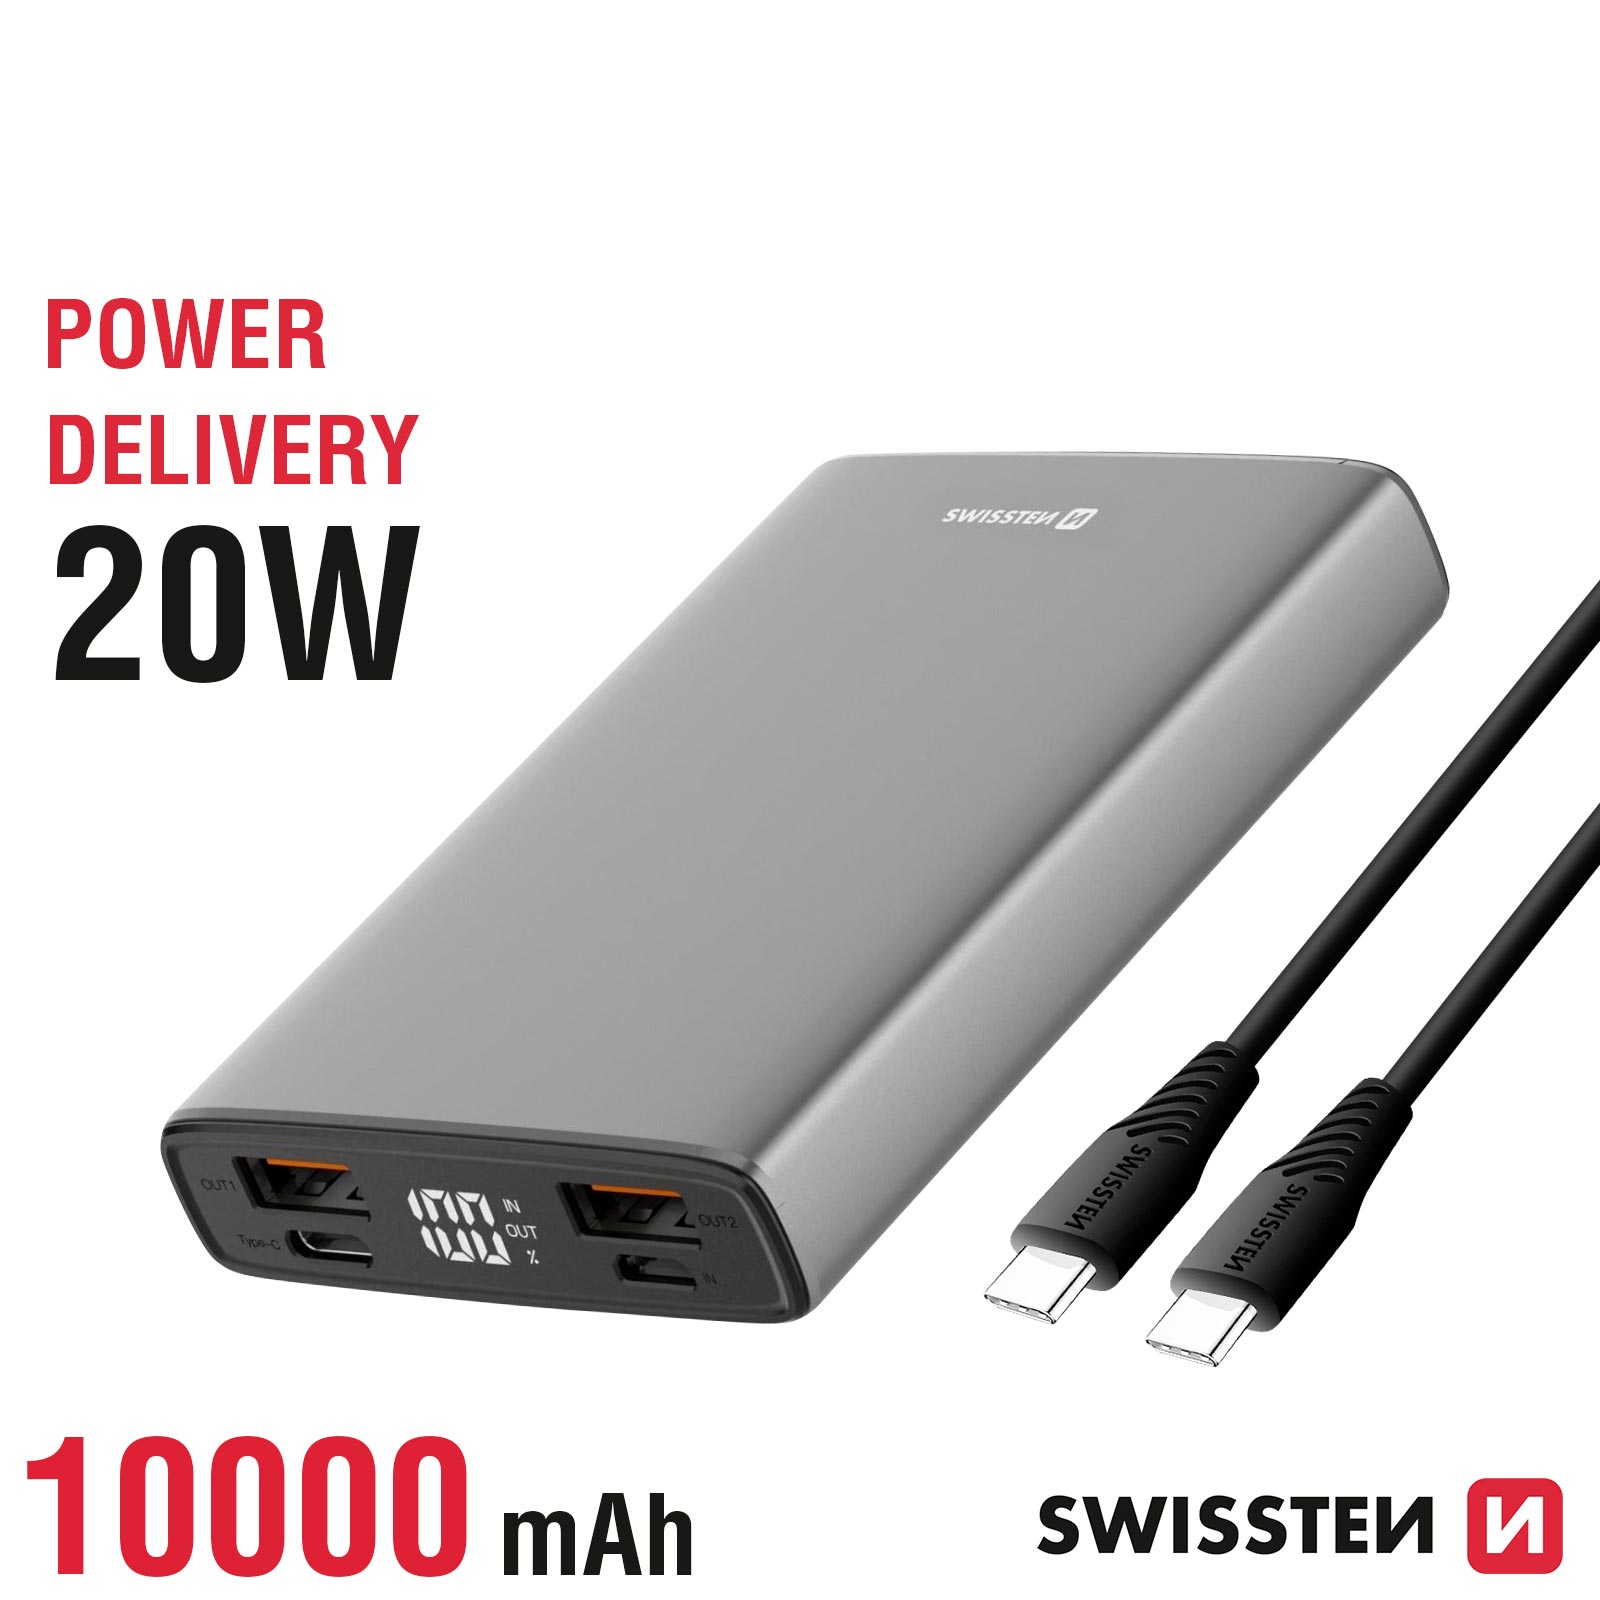 Powerbank 20W Power Delivery 10000mAh, USB-C e USB Quick Charge 3.0 + cavo  USB-C da 1 metro, Swissten - grigio - Italiano